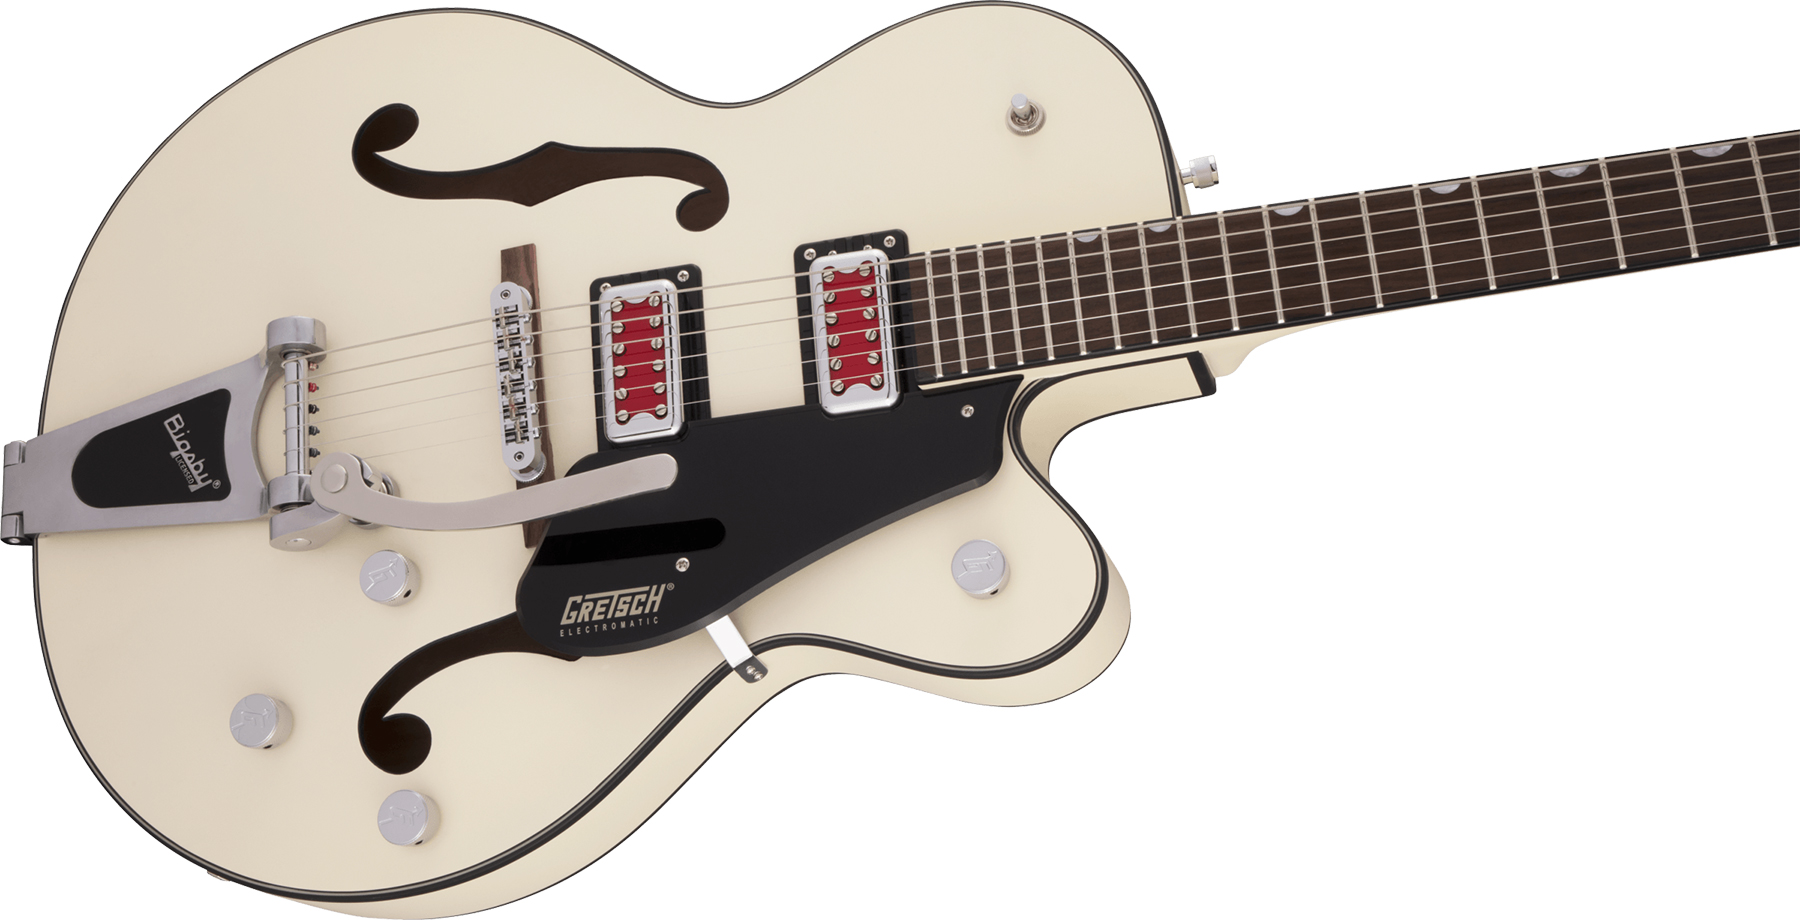 Gretsch G5410t Rat Rod Bigsby Electromatic Hollow Body 2h Trem Rw - Matte Vintage White - Semi-hollow electric guitar - Variation 3